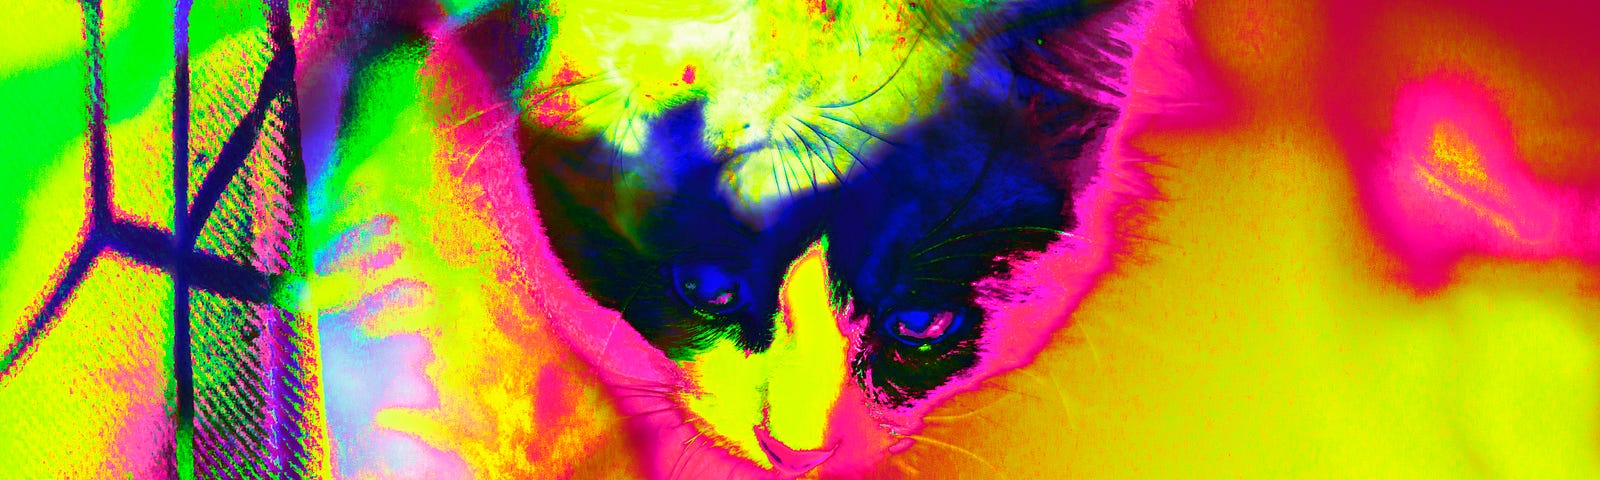 Kitten pop art, vibrant colors.